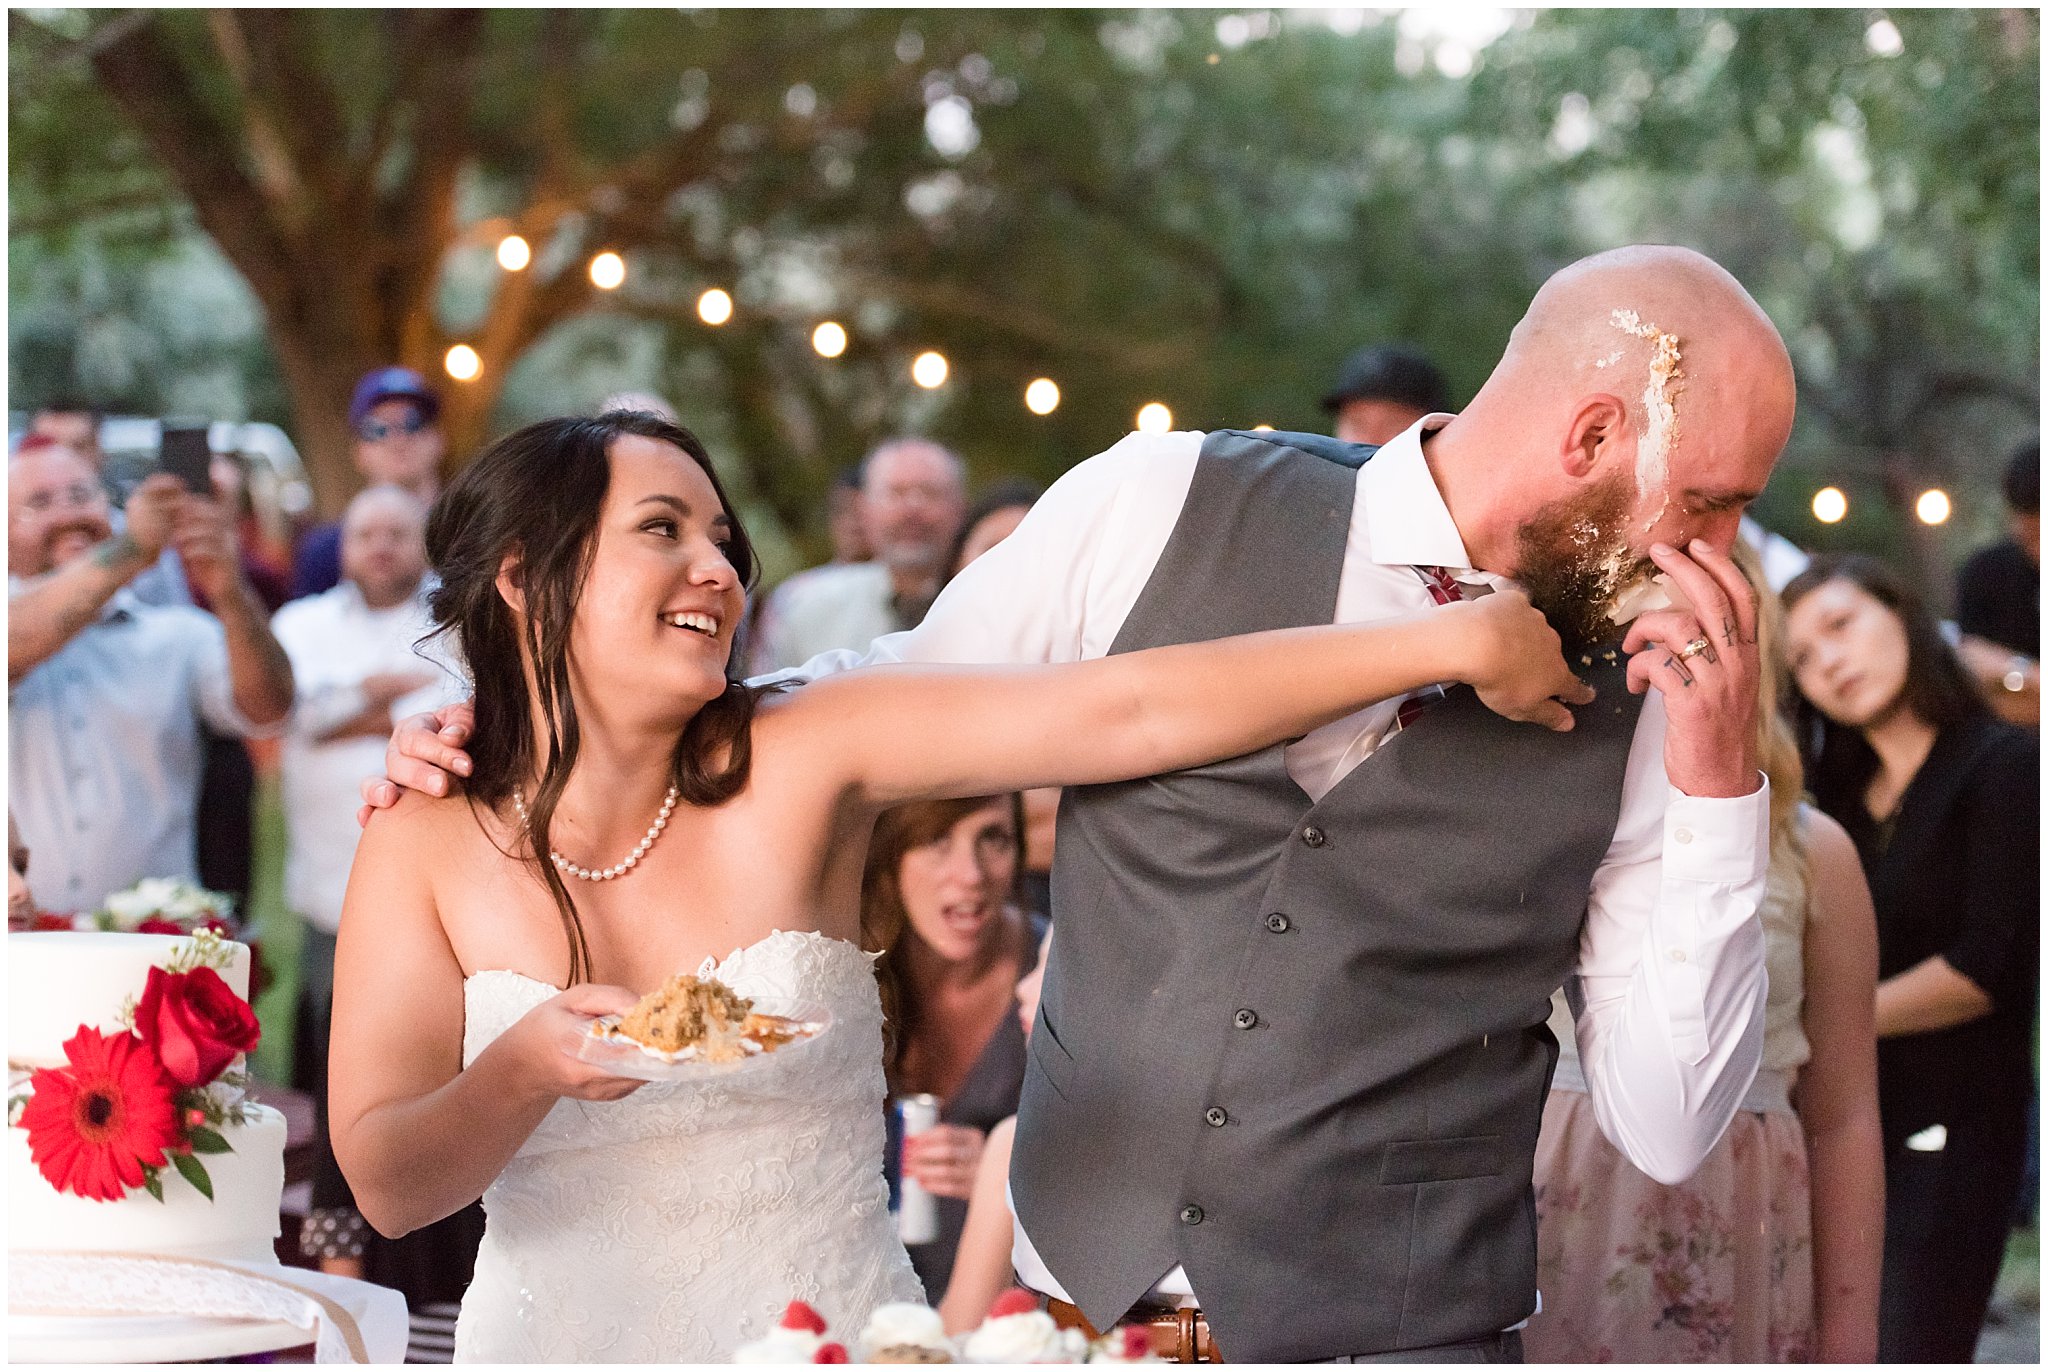 Outdoor summer wedding | Cake smash at reception | Utah Wedding Photographers | Jessie and Dallin Photography